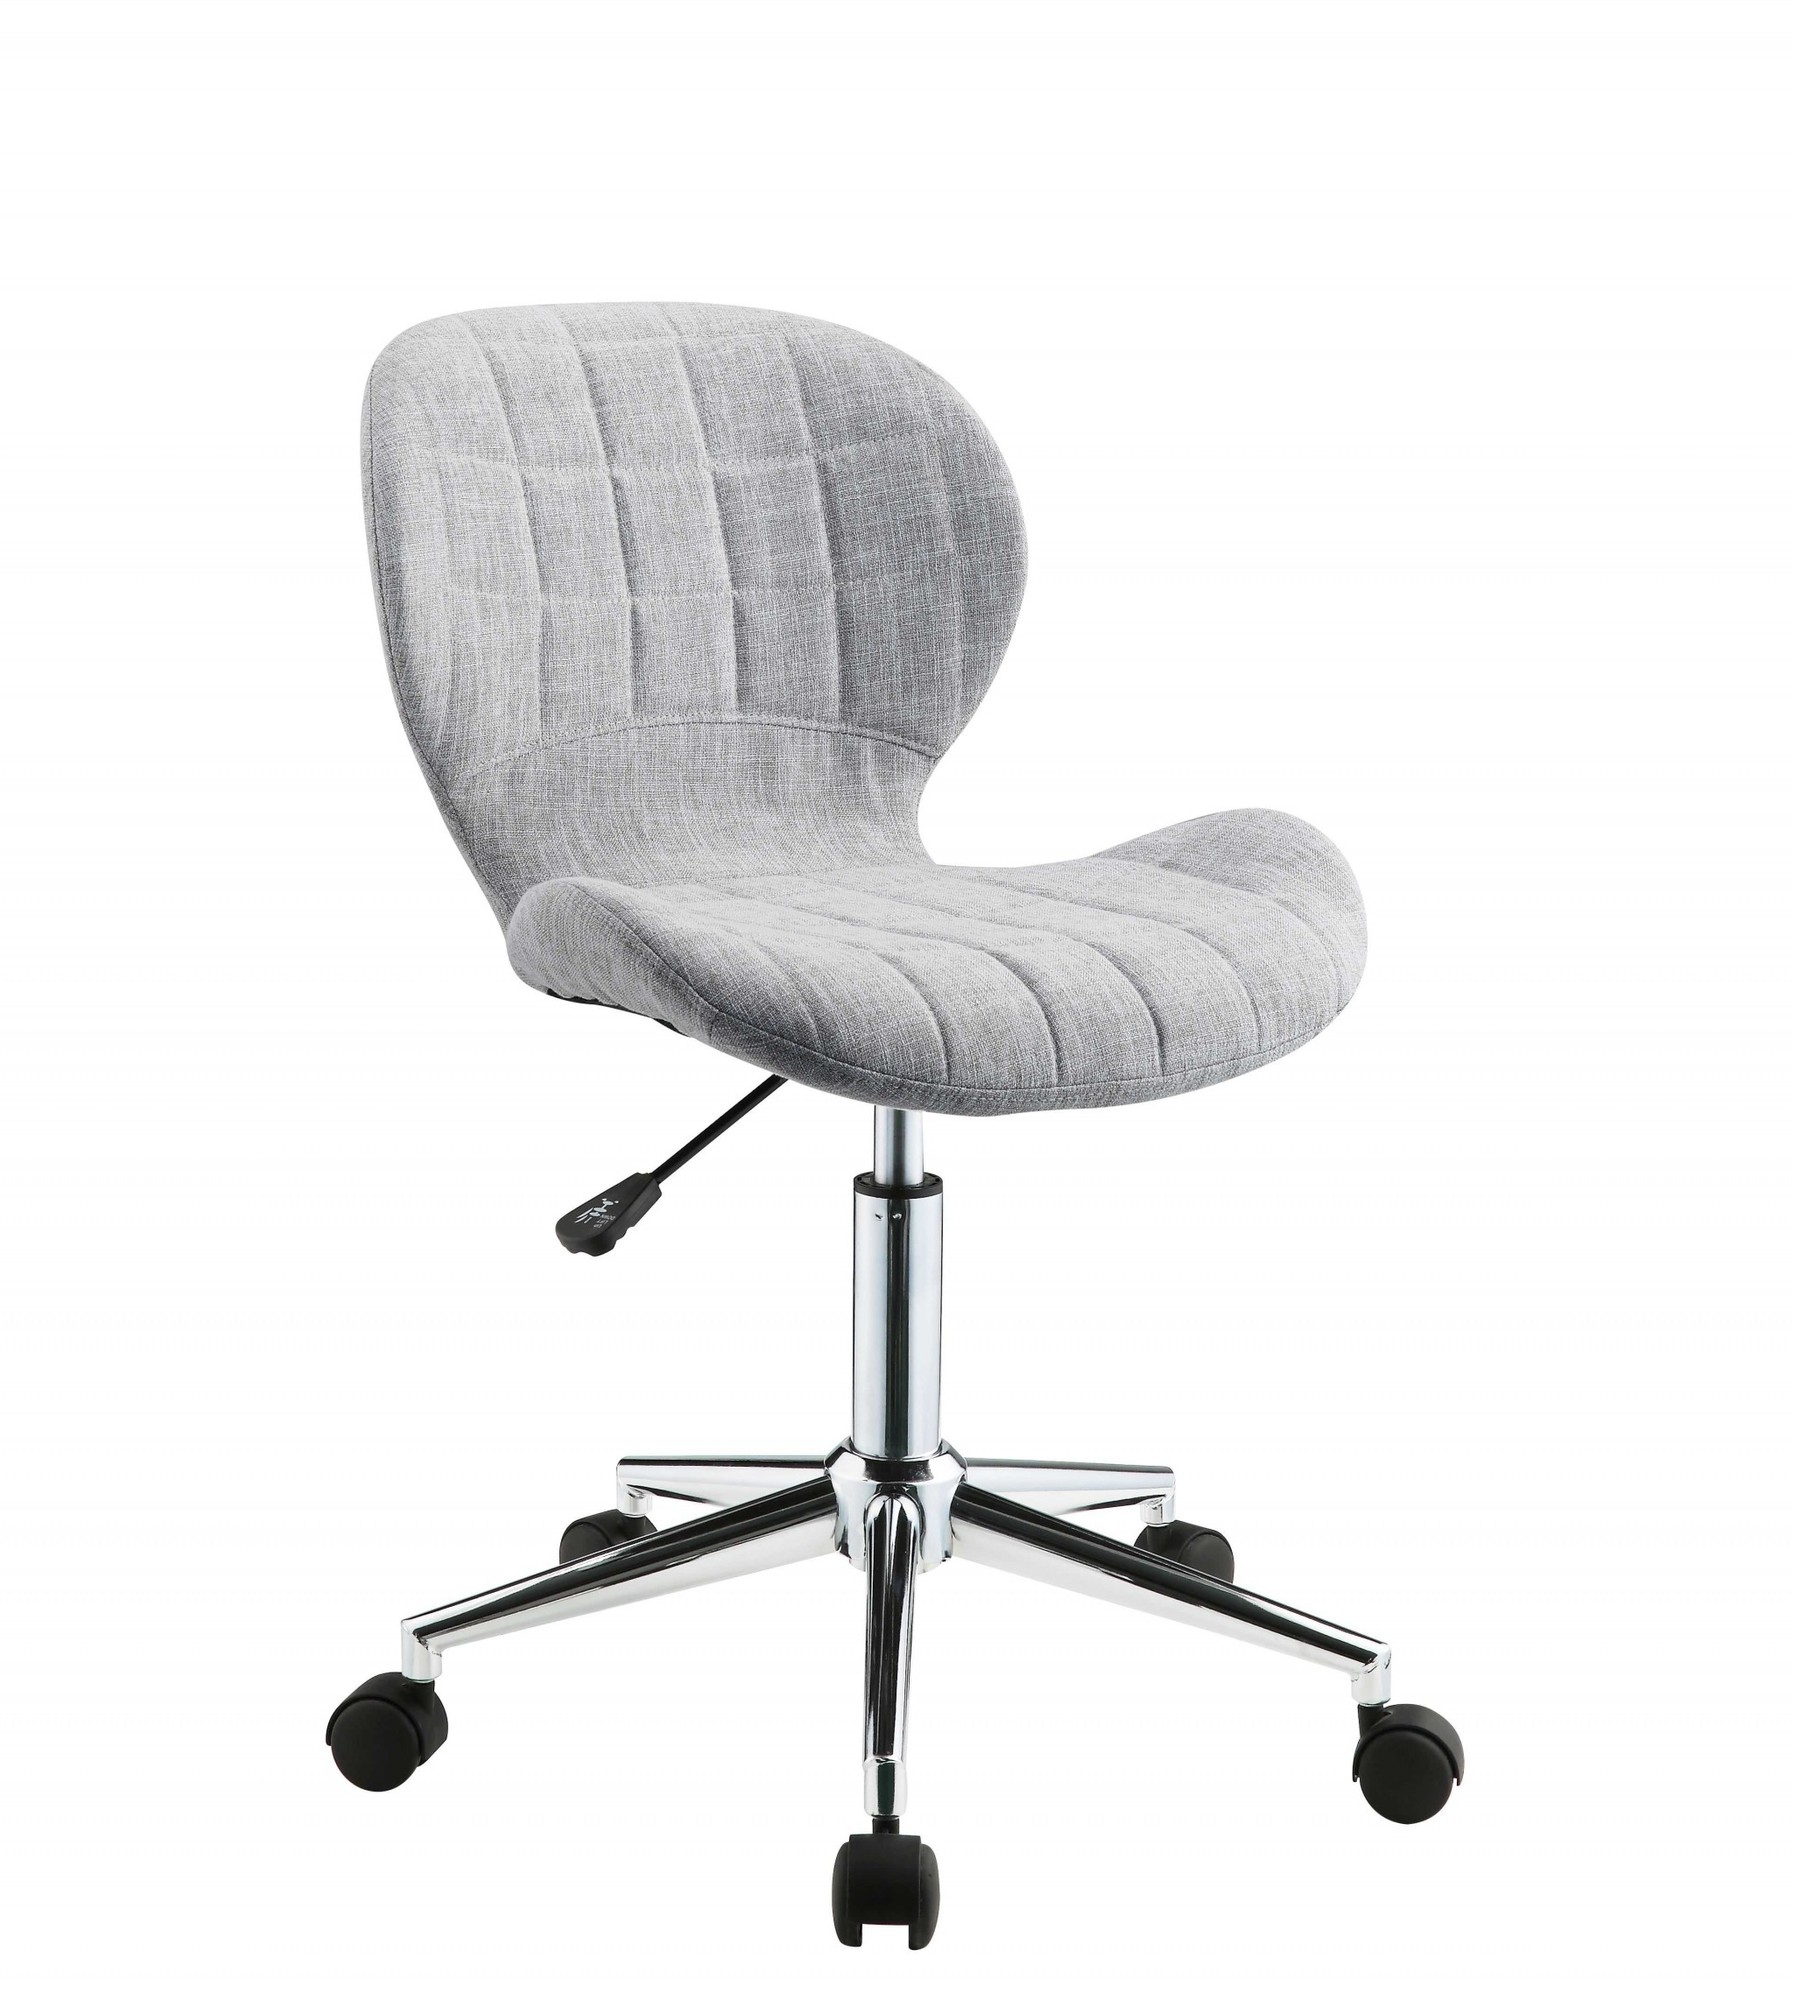 19" X 23" X 30" Light Blue-Gray Fabric Office Chair